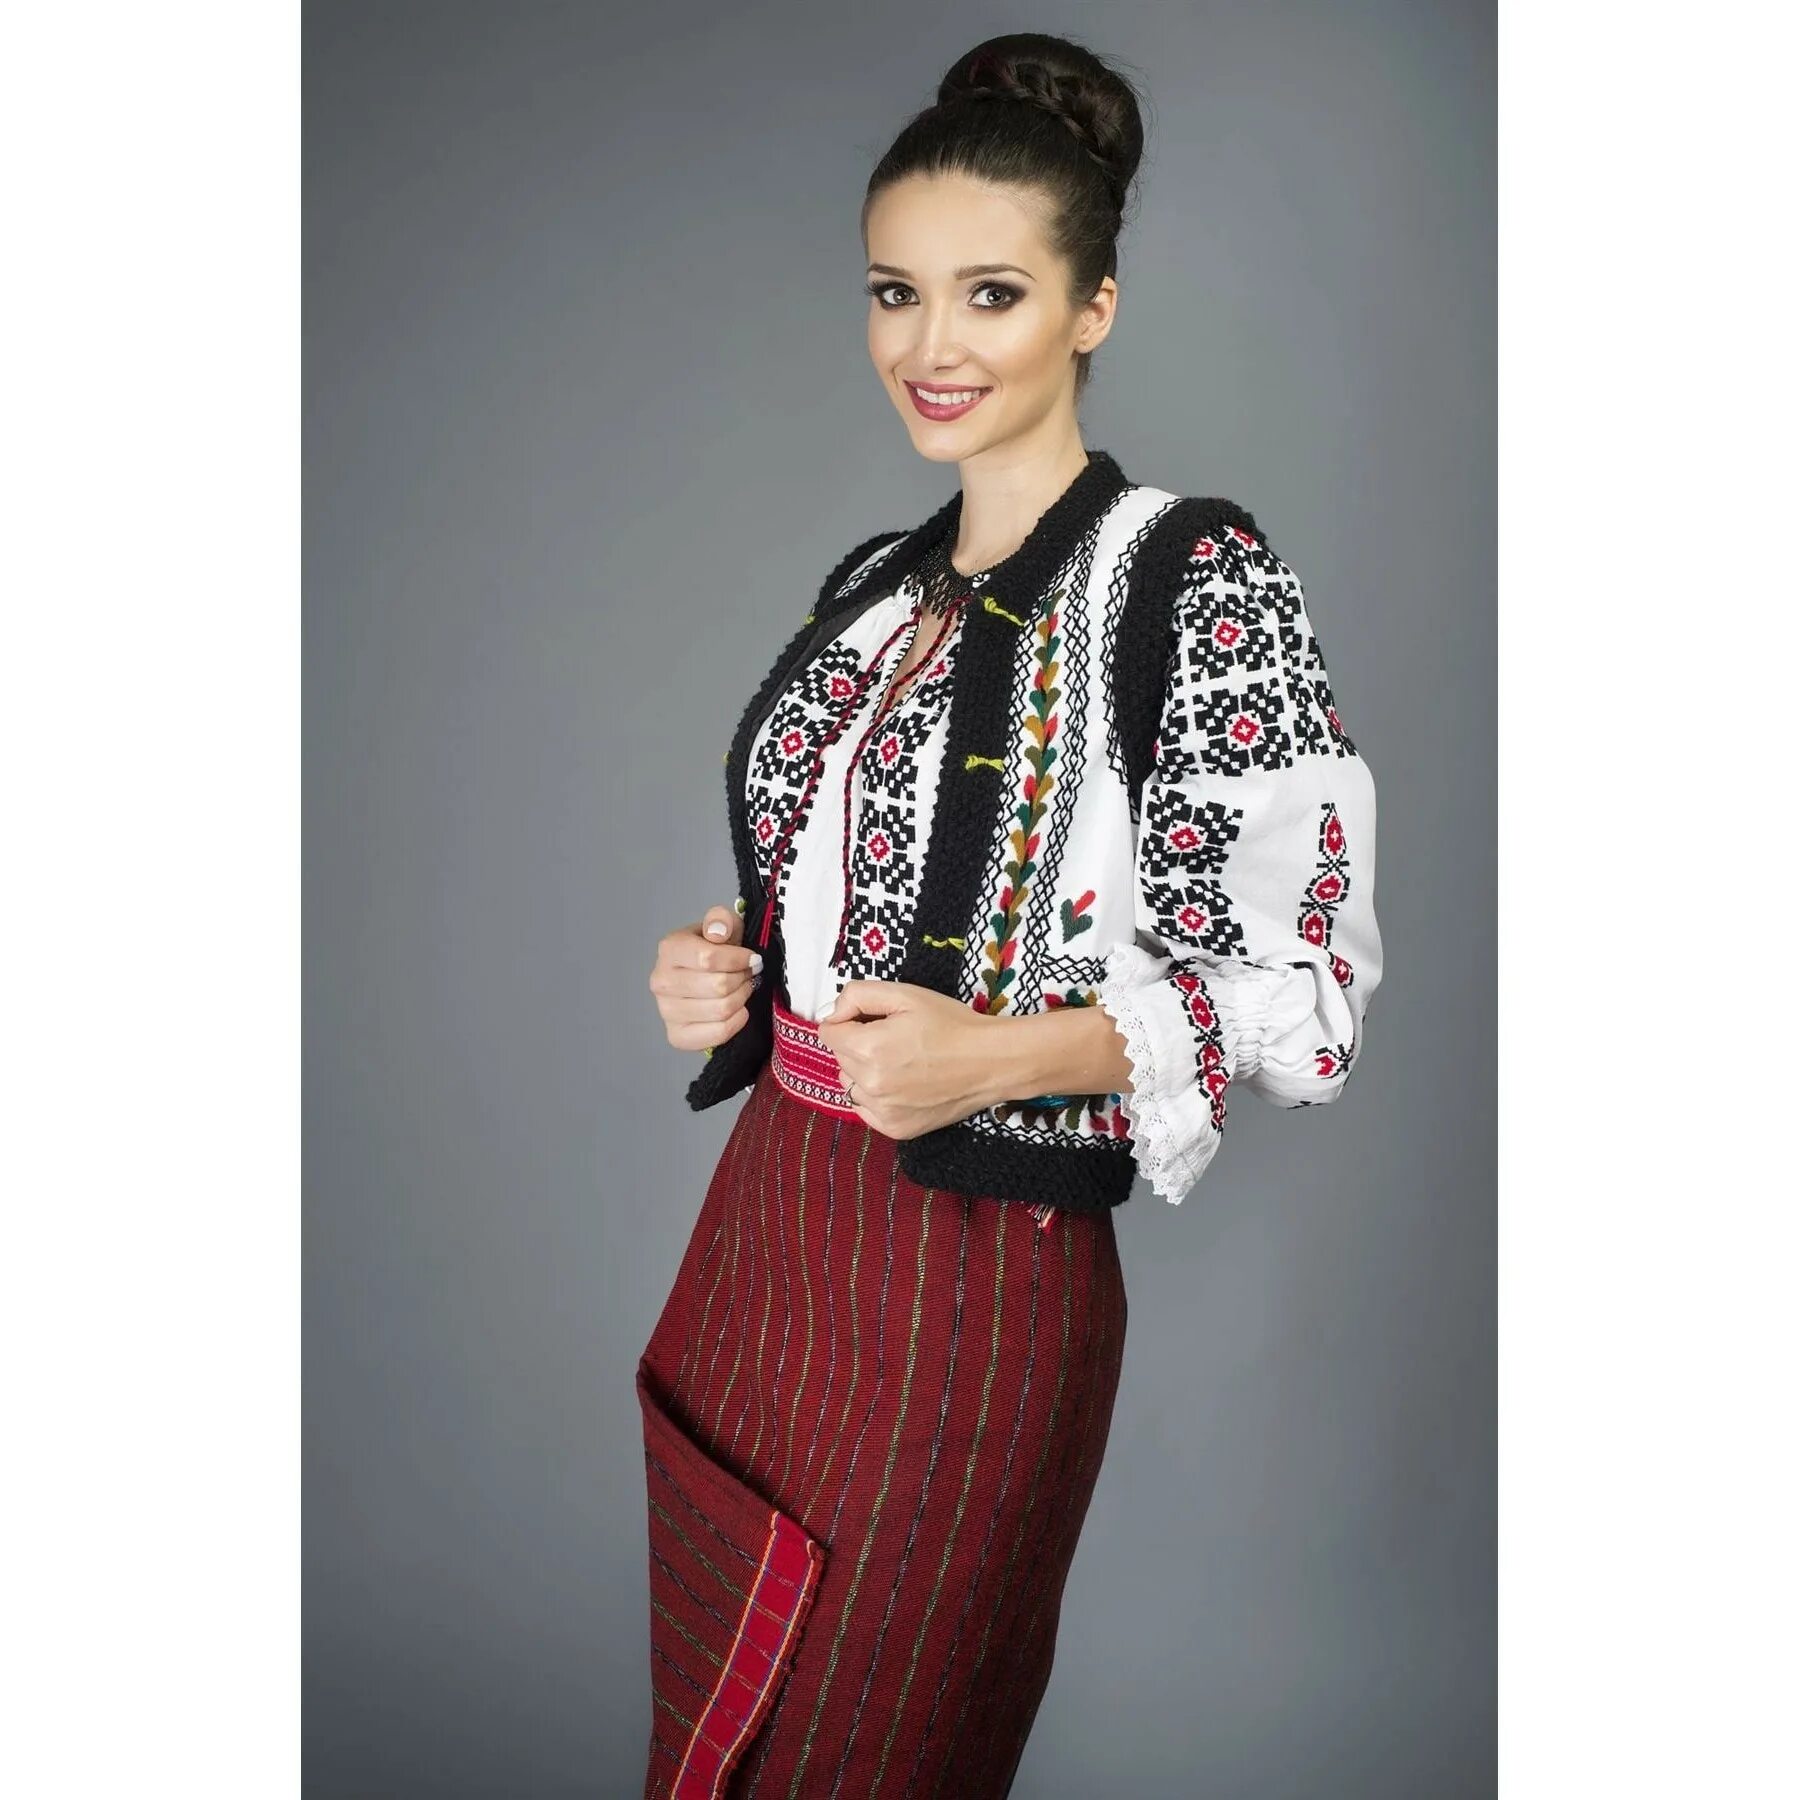 Молдаван женщина. Национальный костюм Молдавии. Молдавия молдаване внешность. Молдаванин, Молдаванка, молдаване. Костюм Молдаванки.